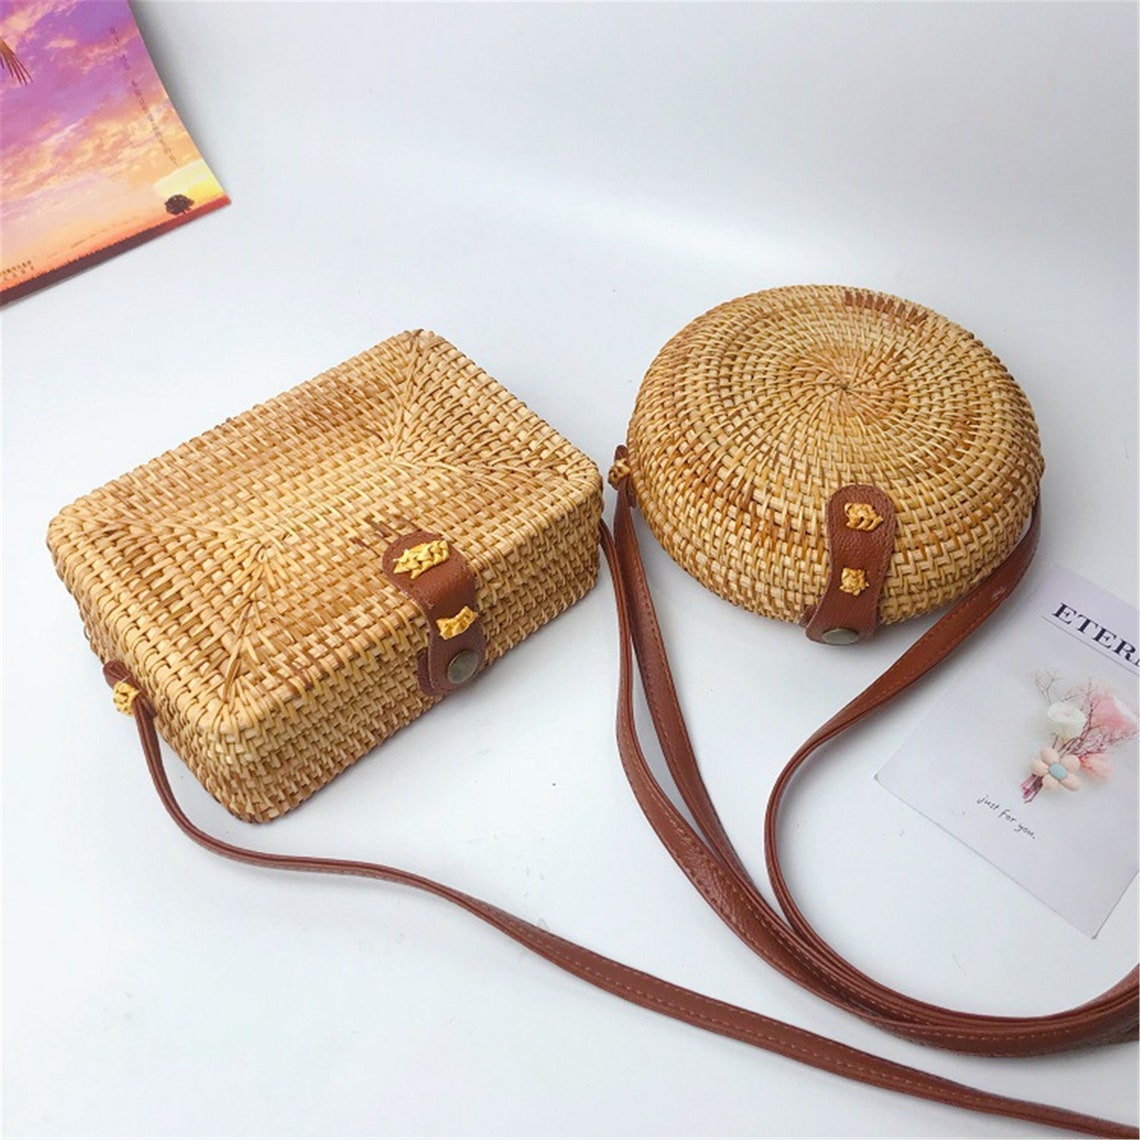 Woven Rattan Bag Handmade Straw Shoulder Bag Small Beach | Etsy